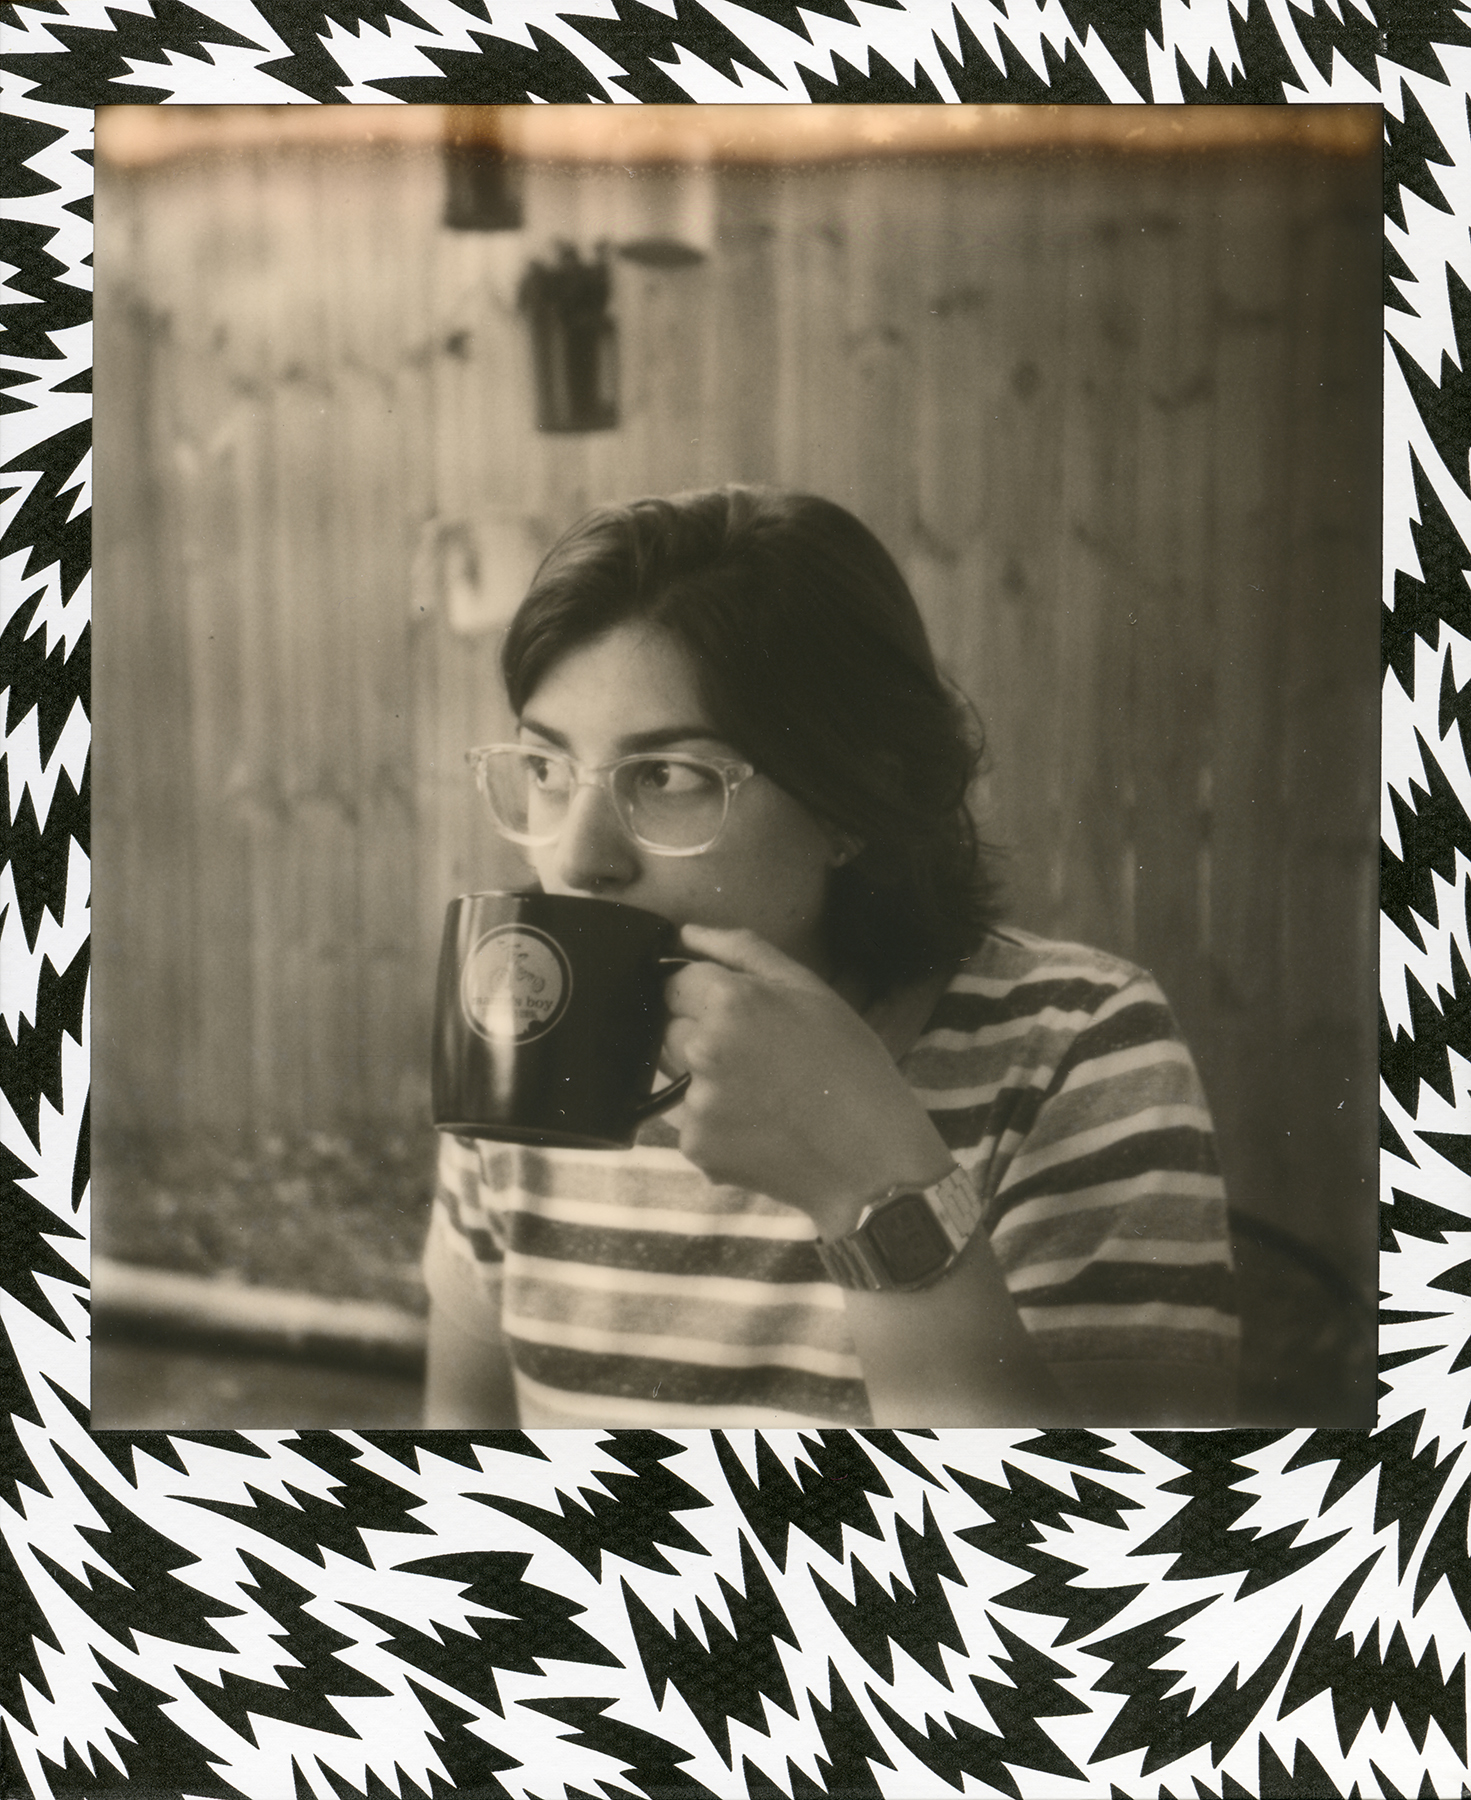 Taryn | Polaroid Sun 660 | Impossible black and white expired film | David Burgh